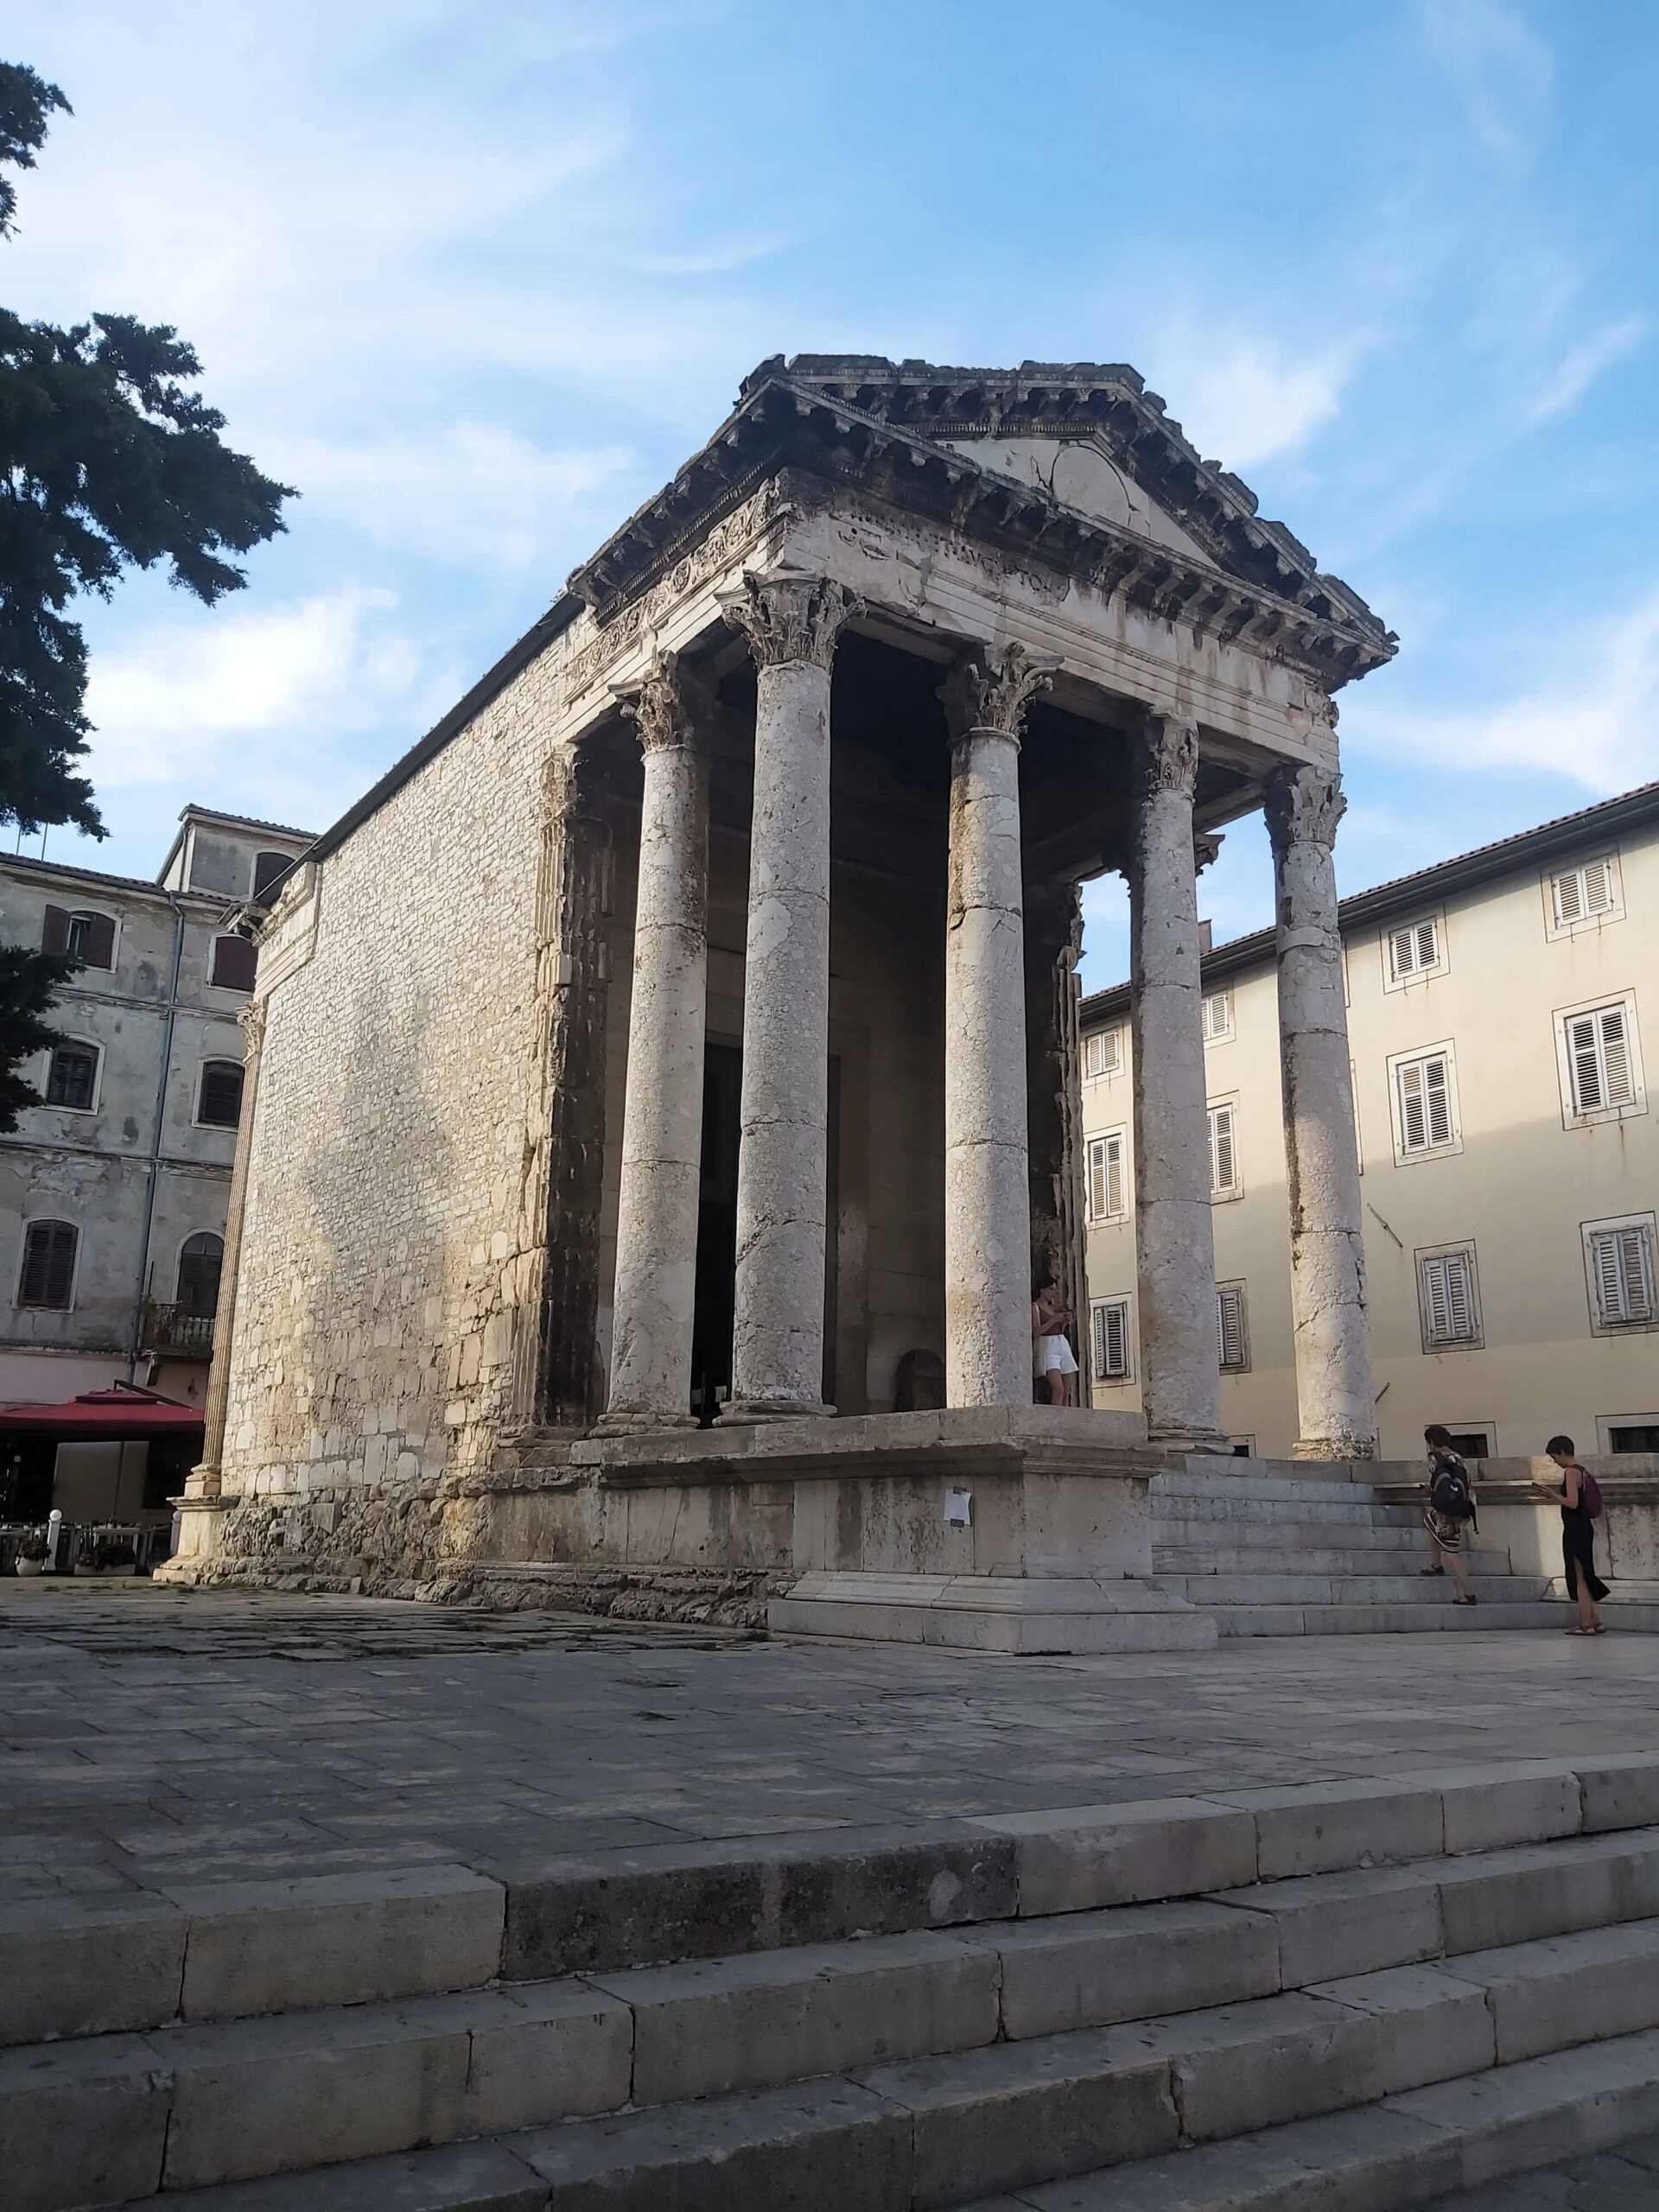 Roman temple in Pula, Croatia